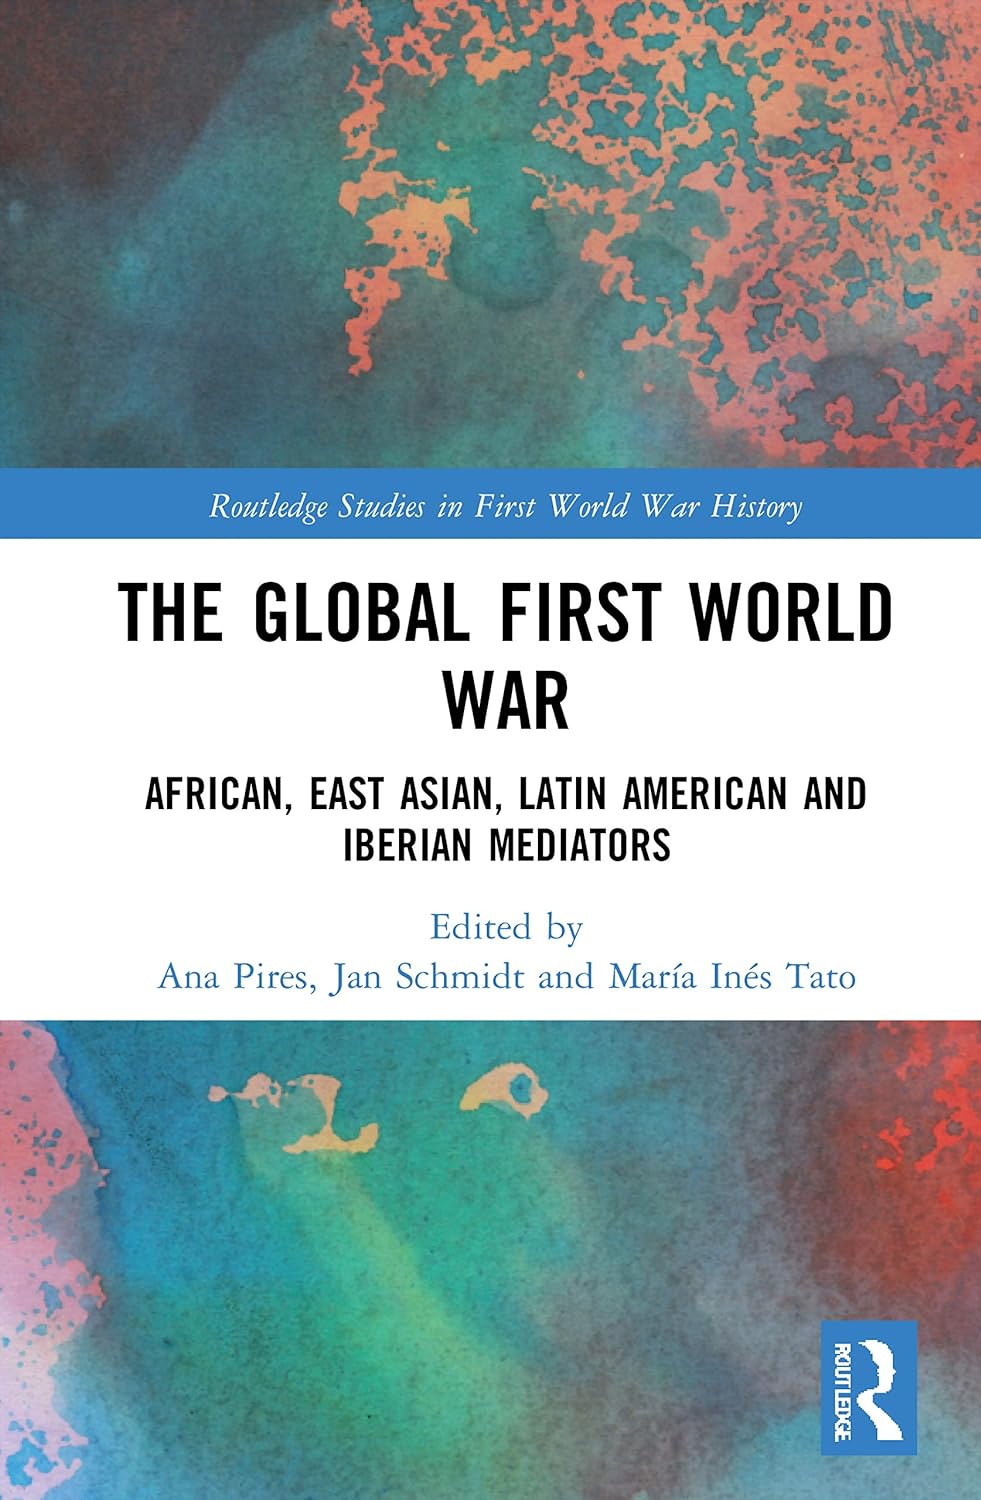 Imagen de portada del libro The global First World War